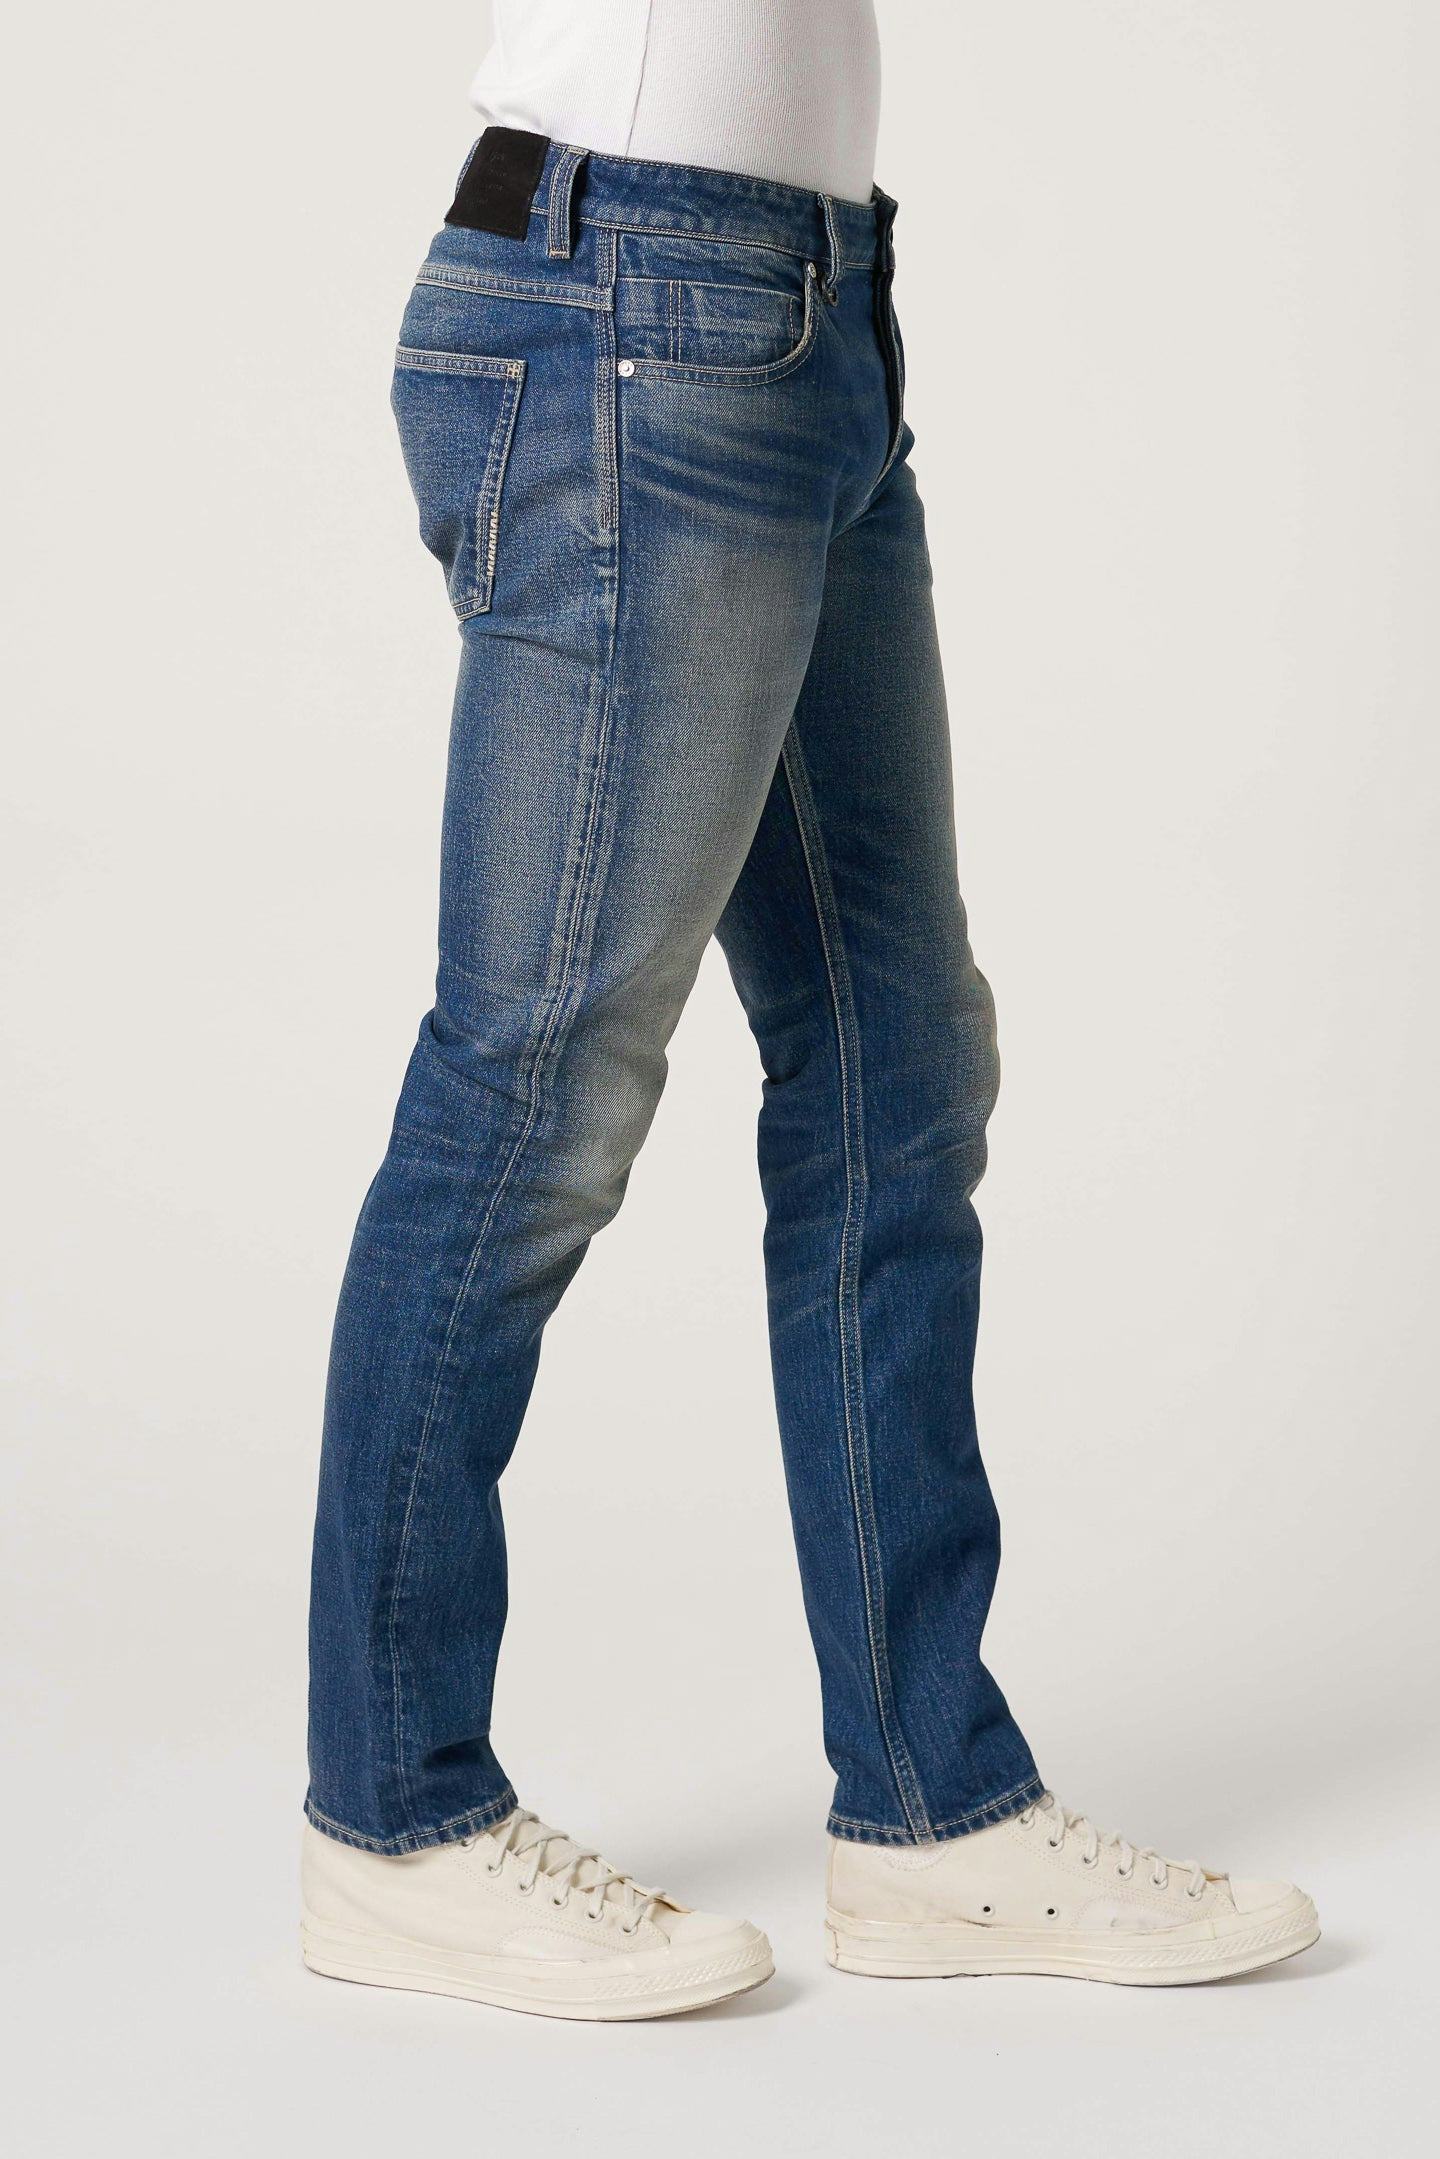 Lou Slim - Montage Neuw mid darkblue mens-jeans 